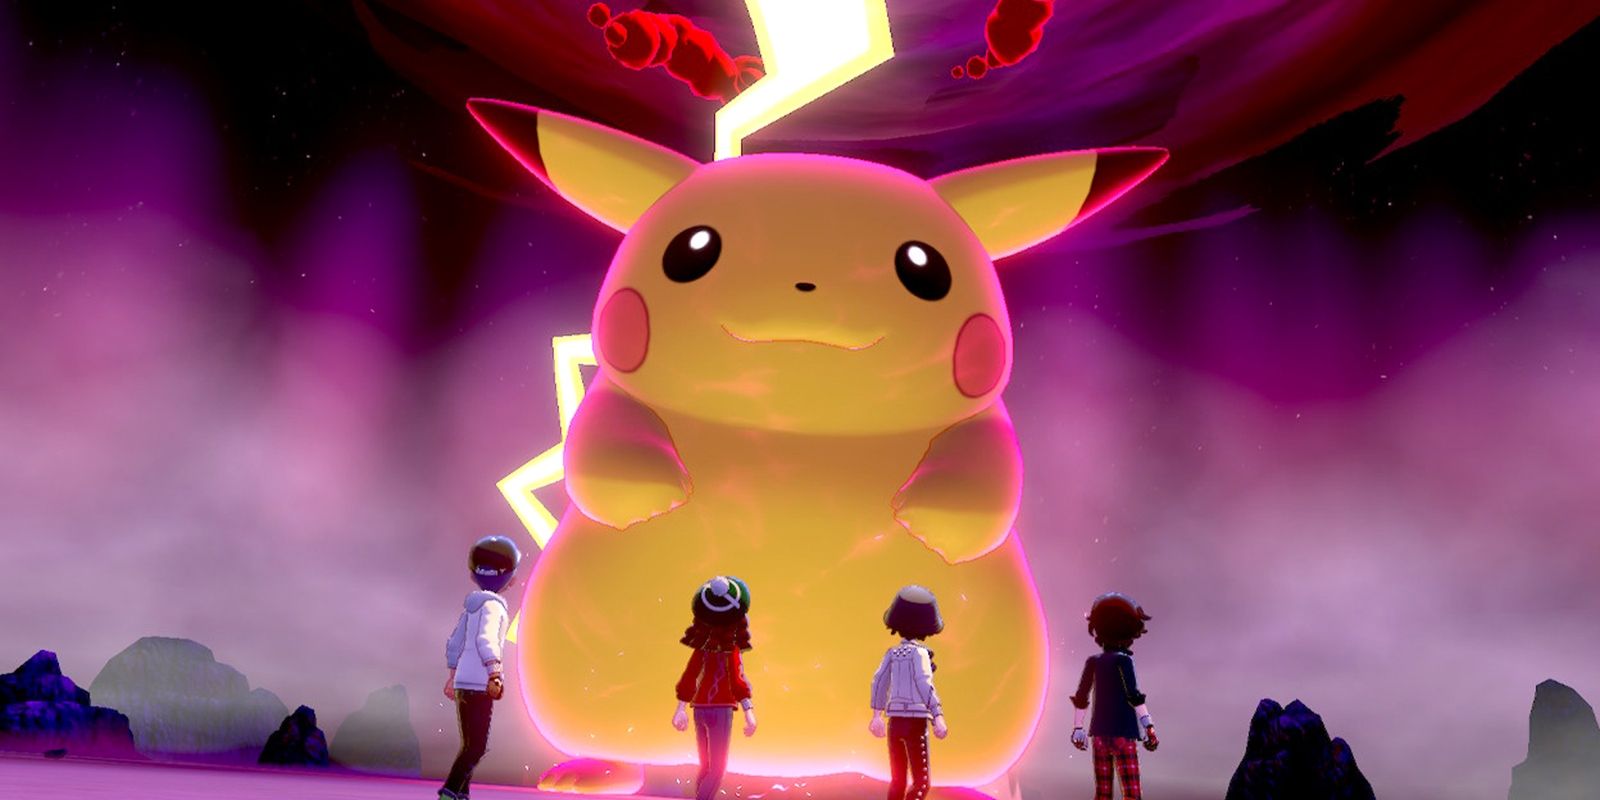 Players encounter a Gigantamax Pikachu in Pokémon Sword and Shield.